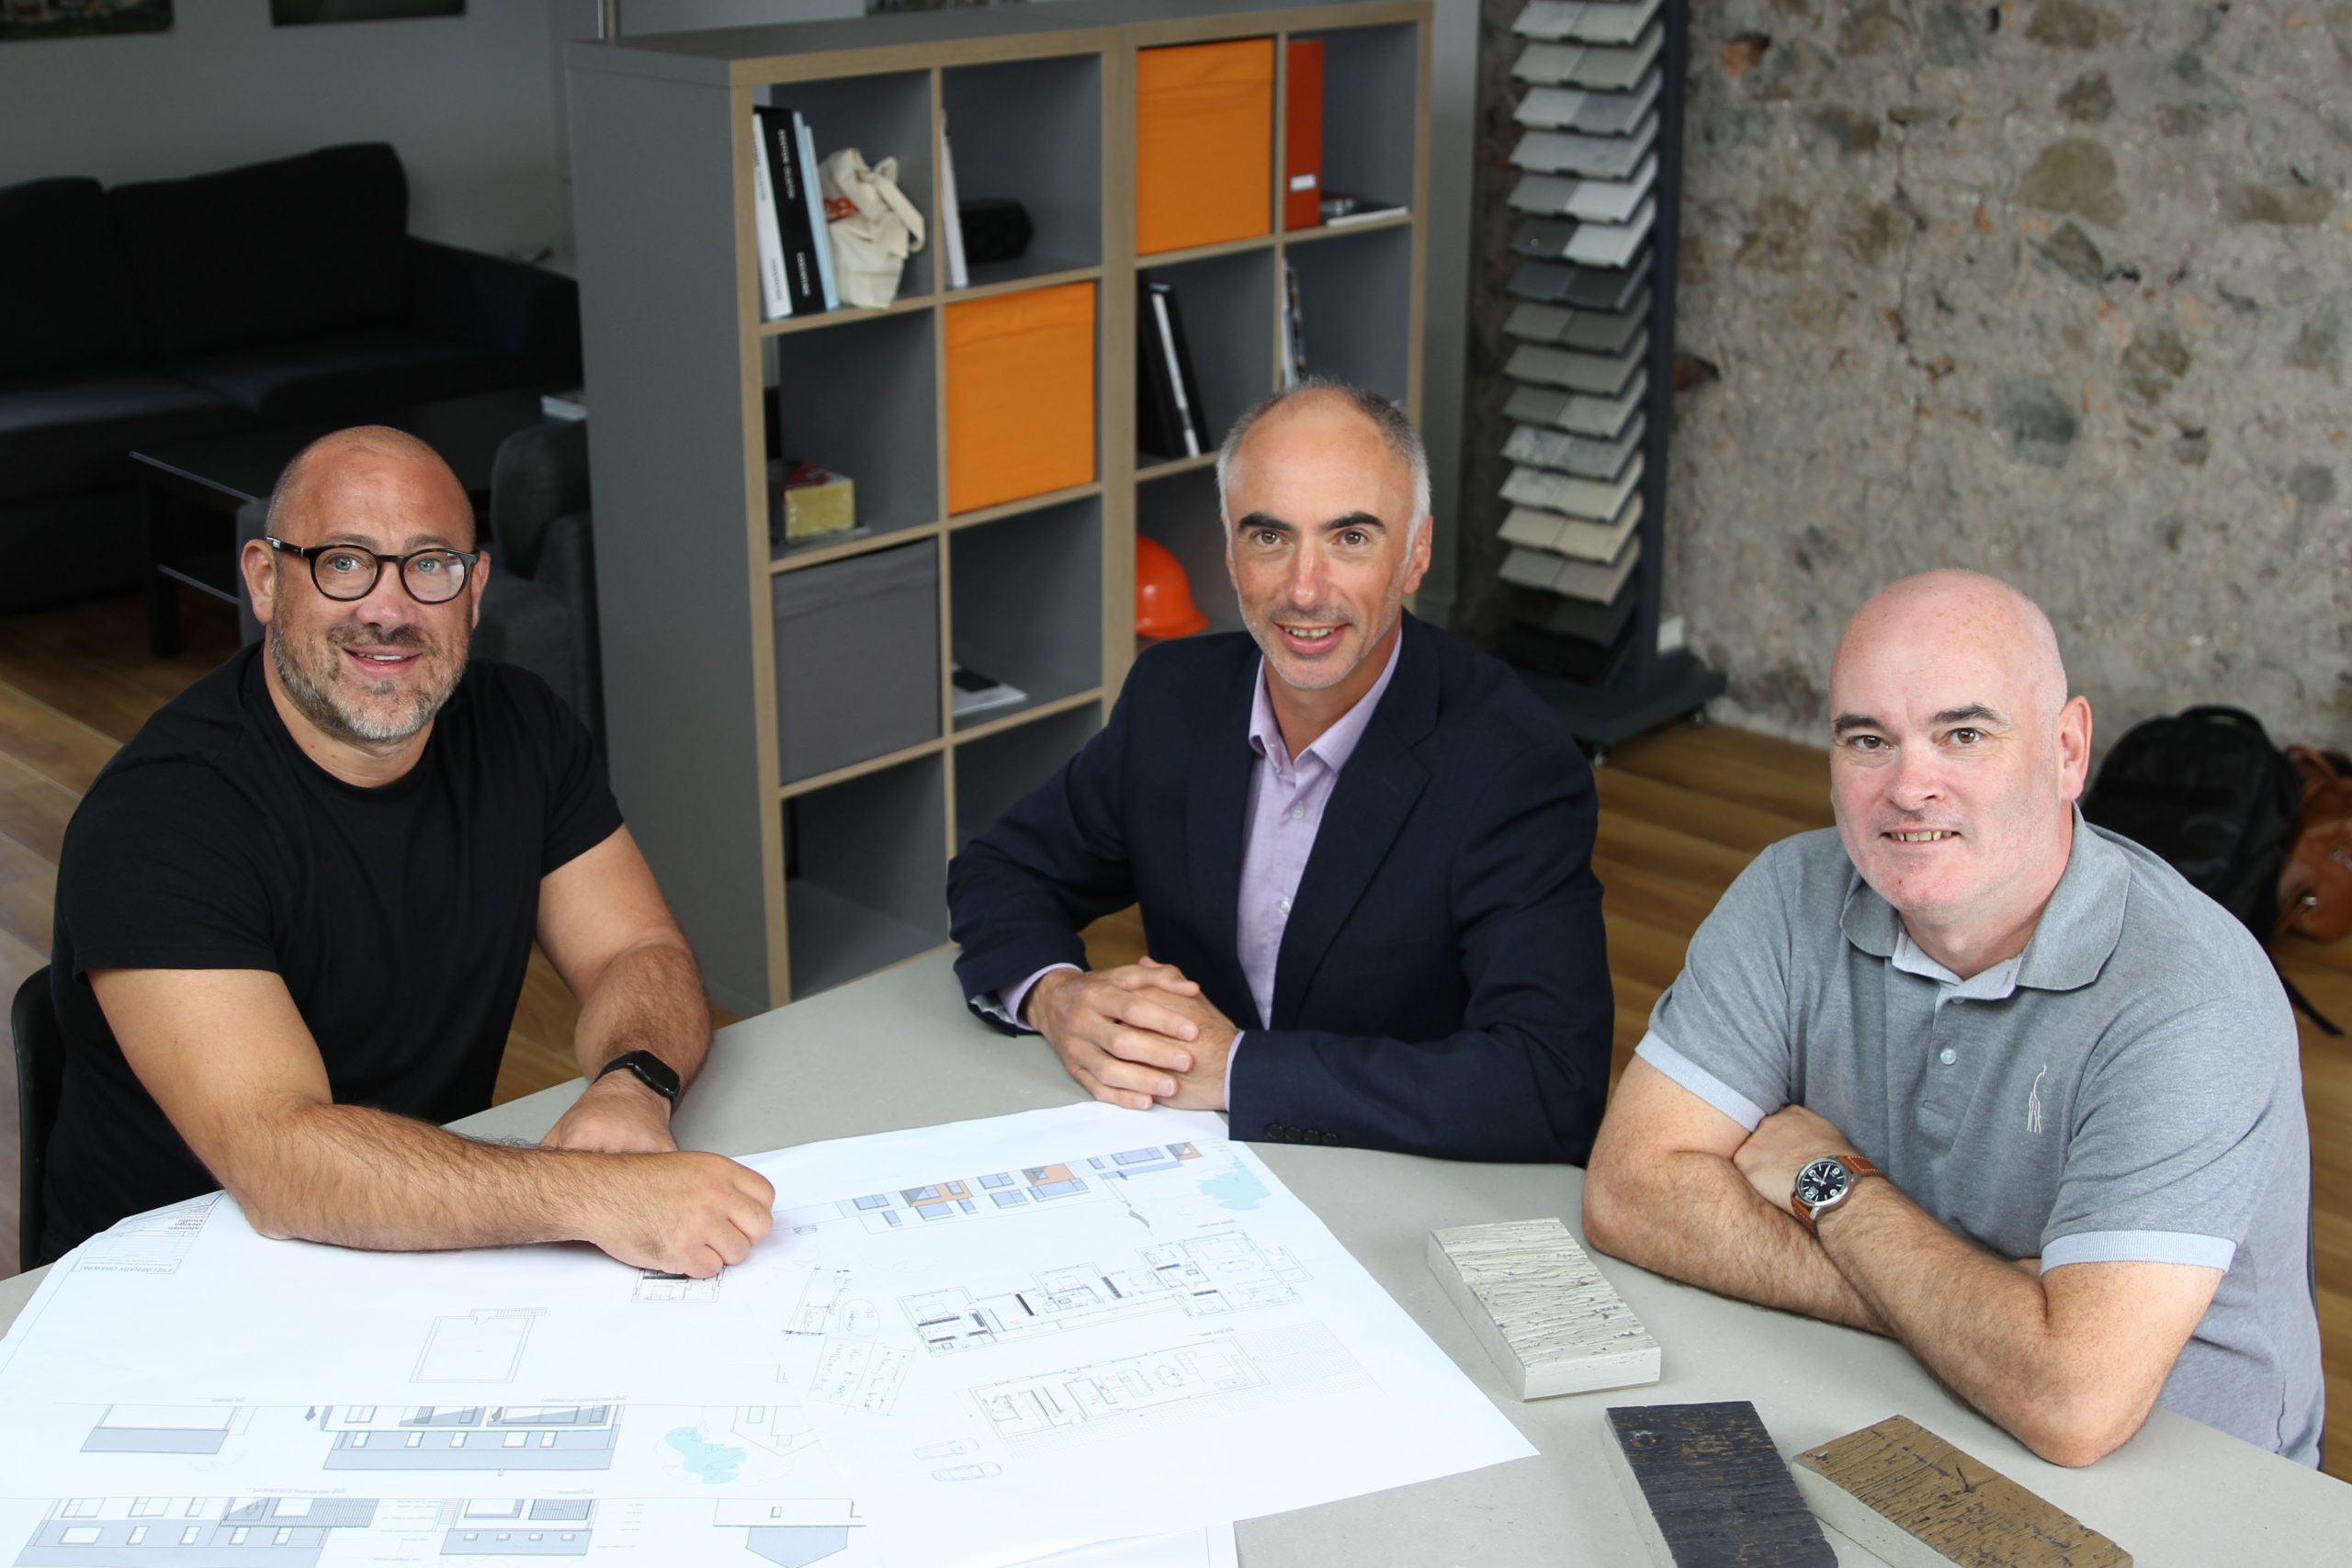 left to right Steven Bell of Slemish Design Studio Architects, Noel Mulholland of Michelin Development, and Joe Magill of Slemish Design Studio Architects.